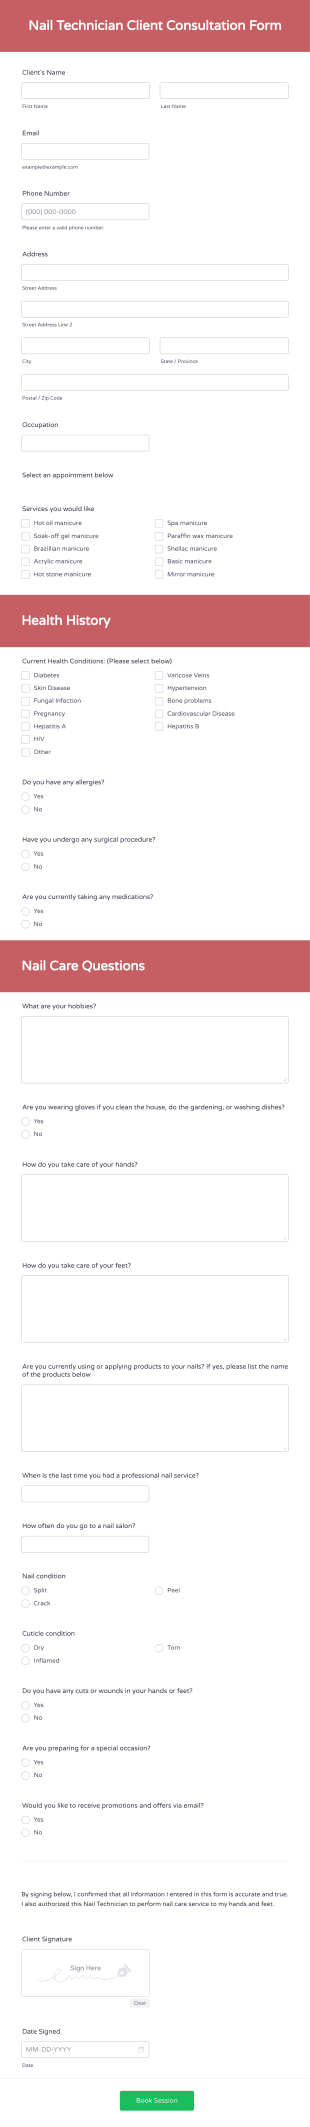 Nail Technician Client Consultation Form Template